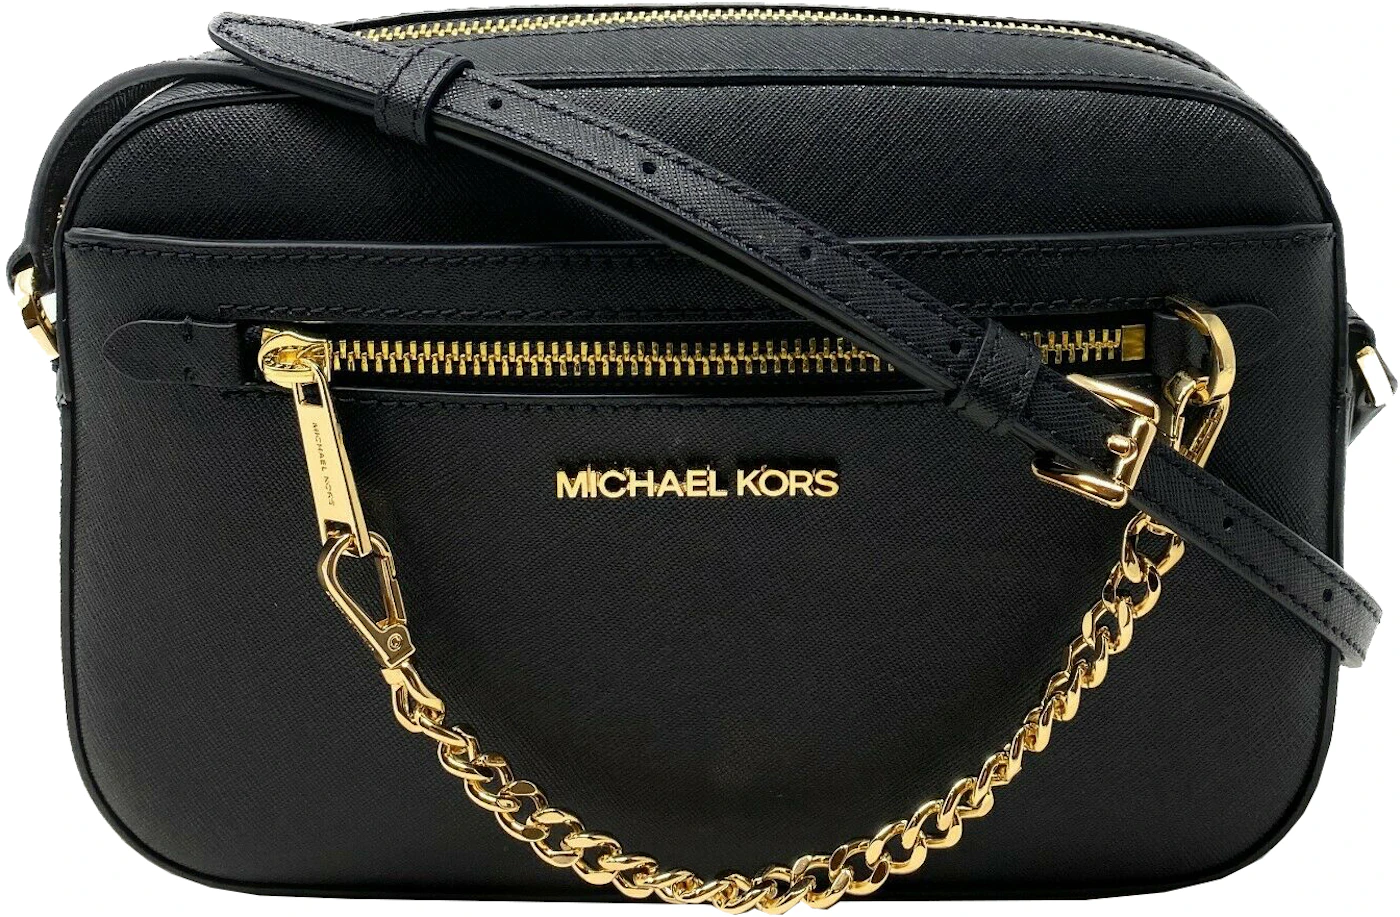 Michael Kors Jet Set Zip Chain Crossbody Bag Large Black/Gold in ...